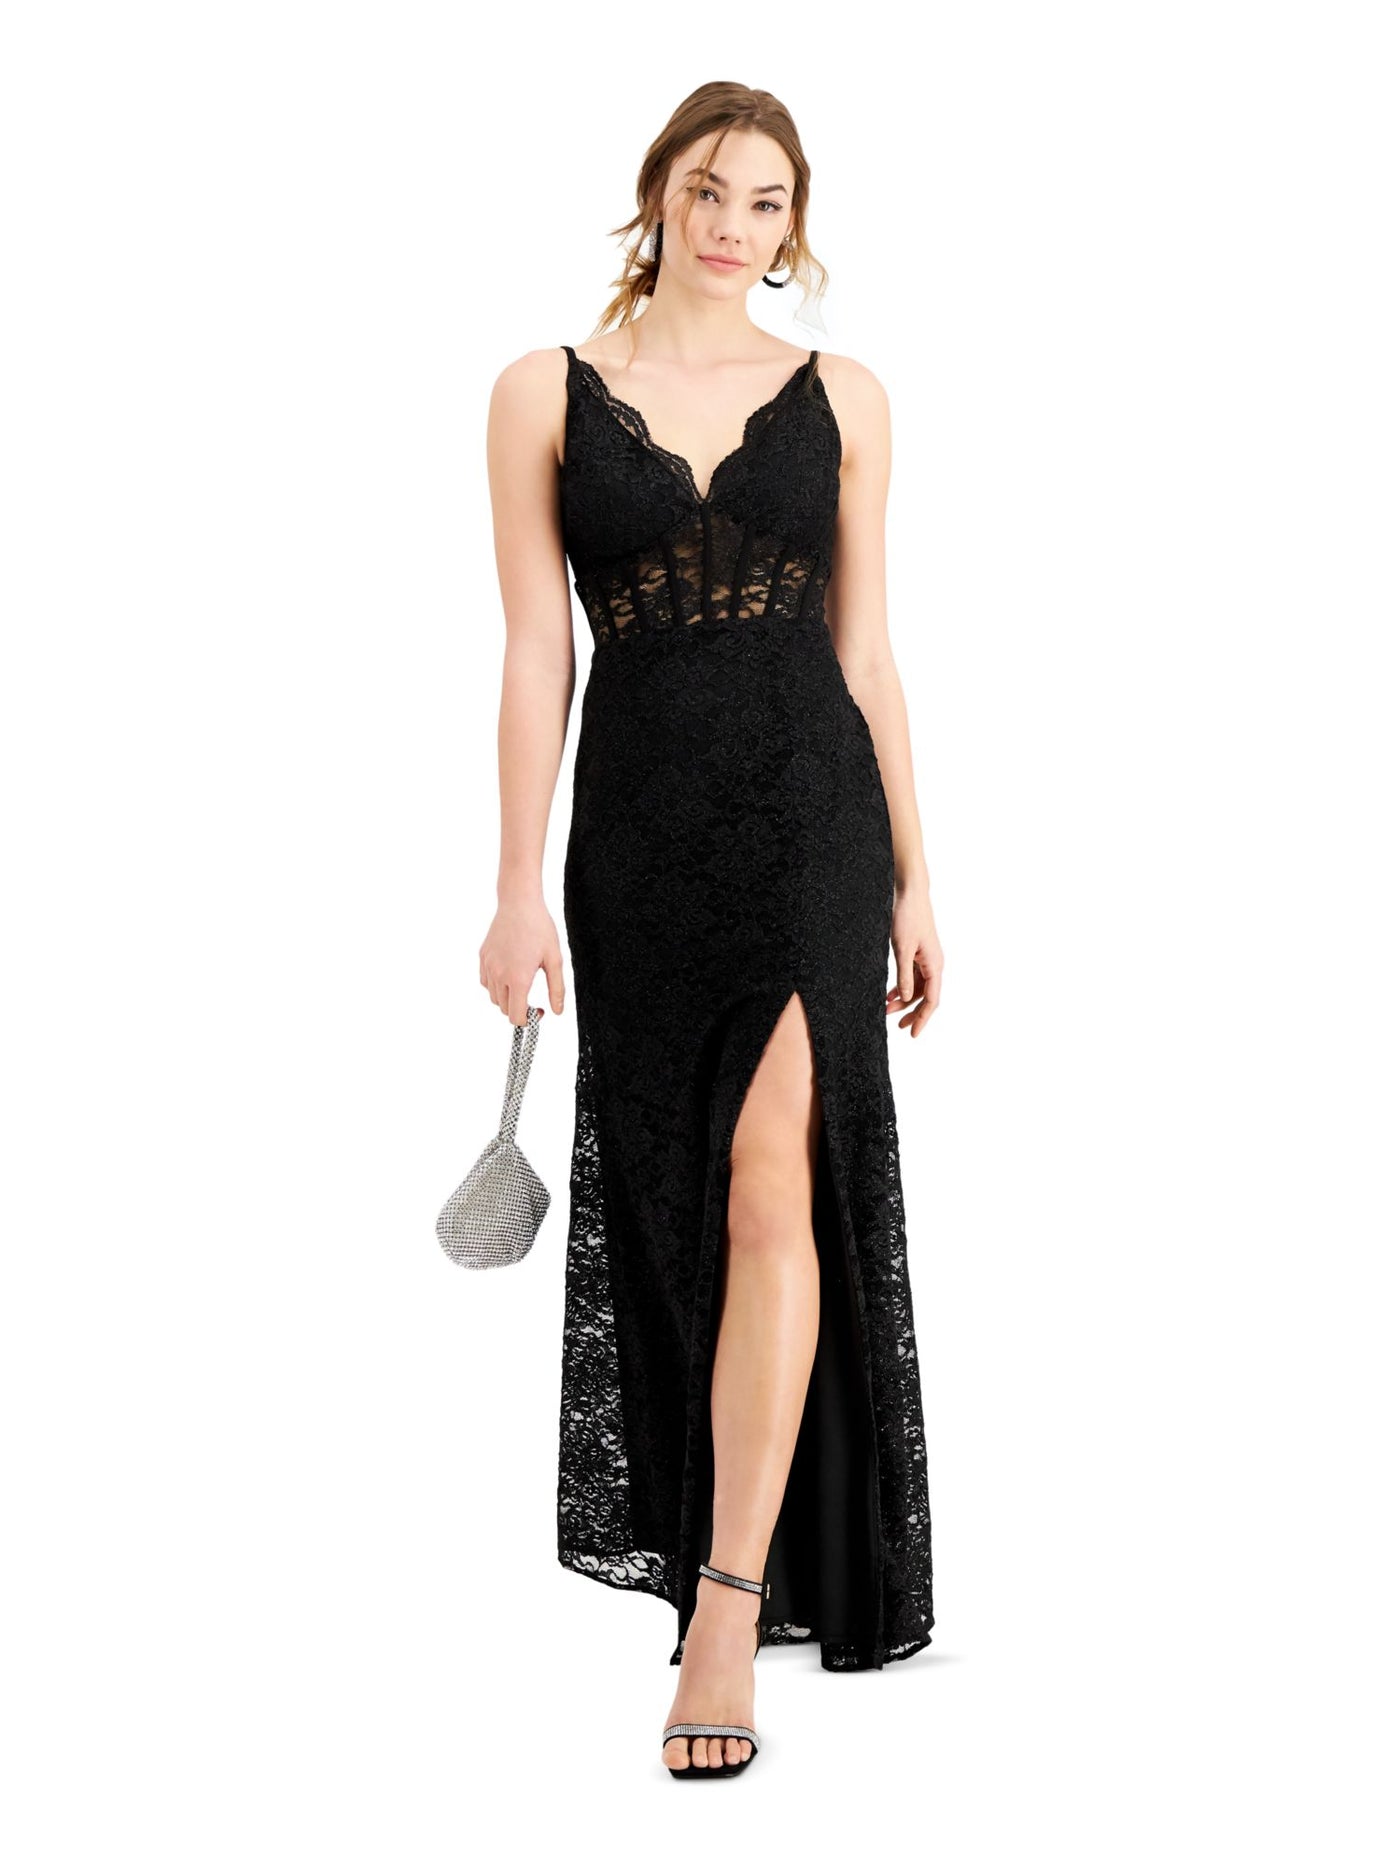 MORGAN & CO Womens Black Lace Scalloped Glitter Slitted Floral Spaghetti Strap V Neck Full-Length Prom Gown Dress Juniors 3